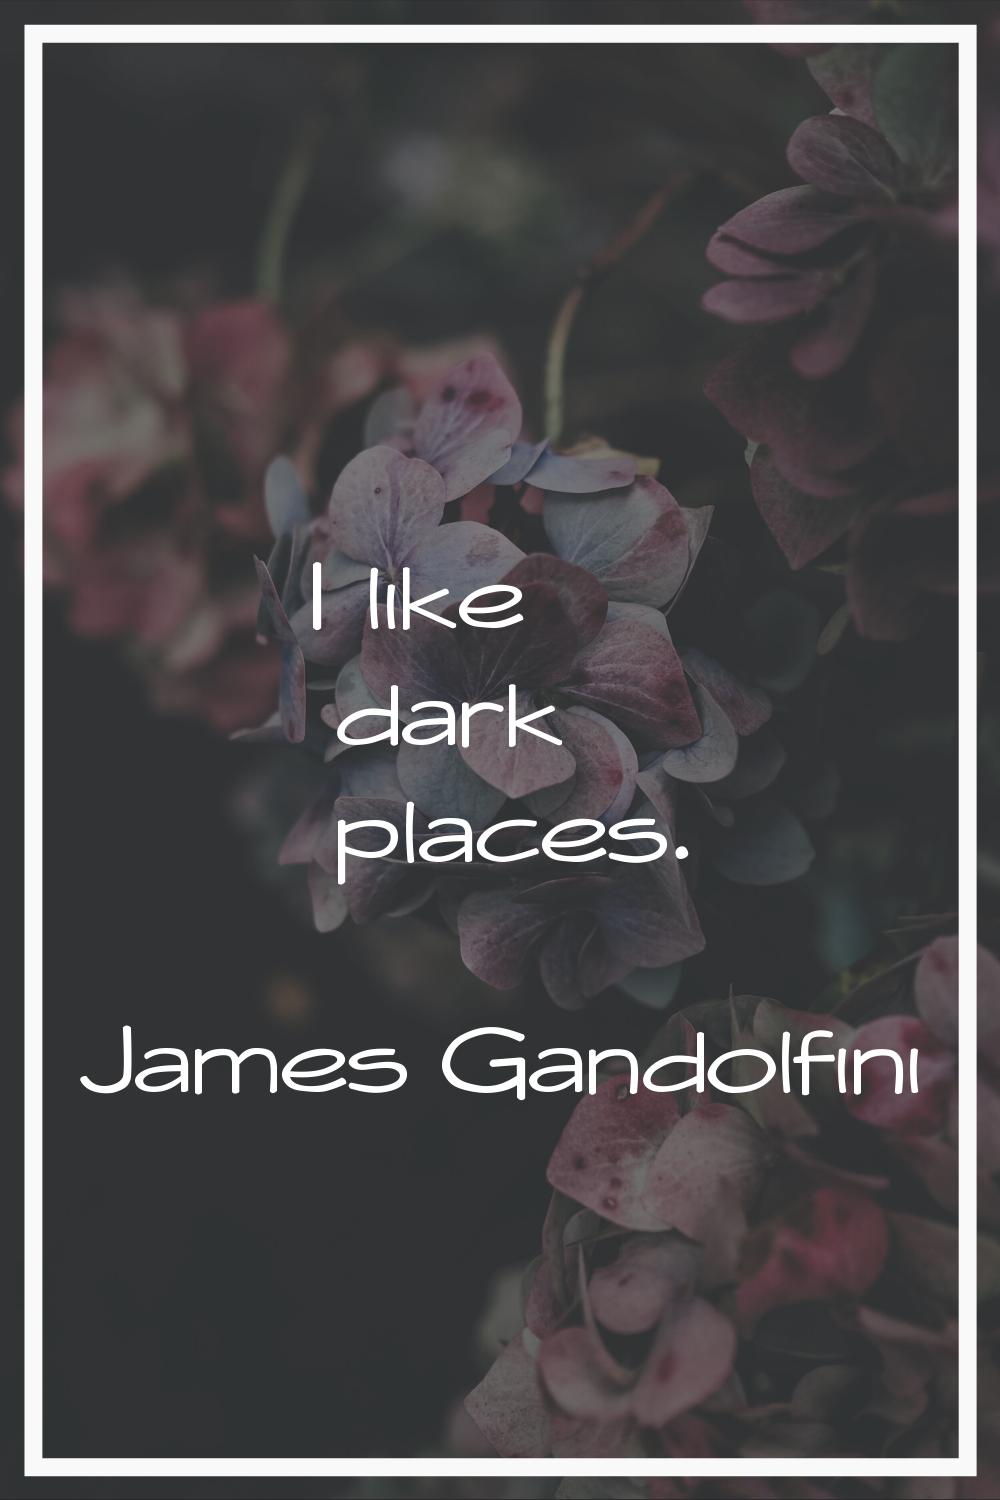 I like dark places.